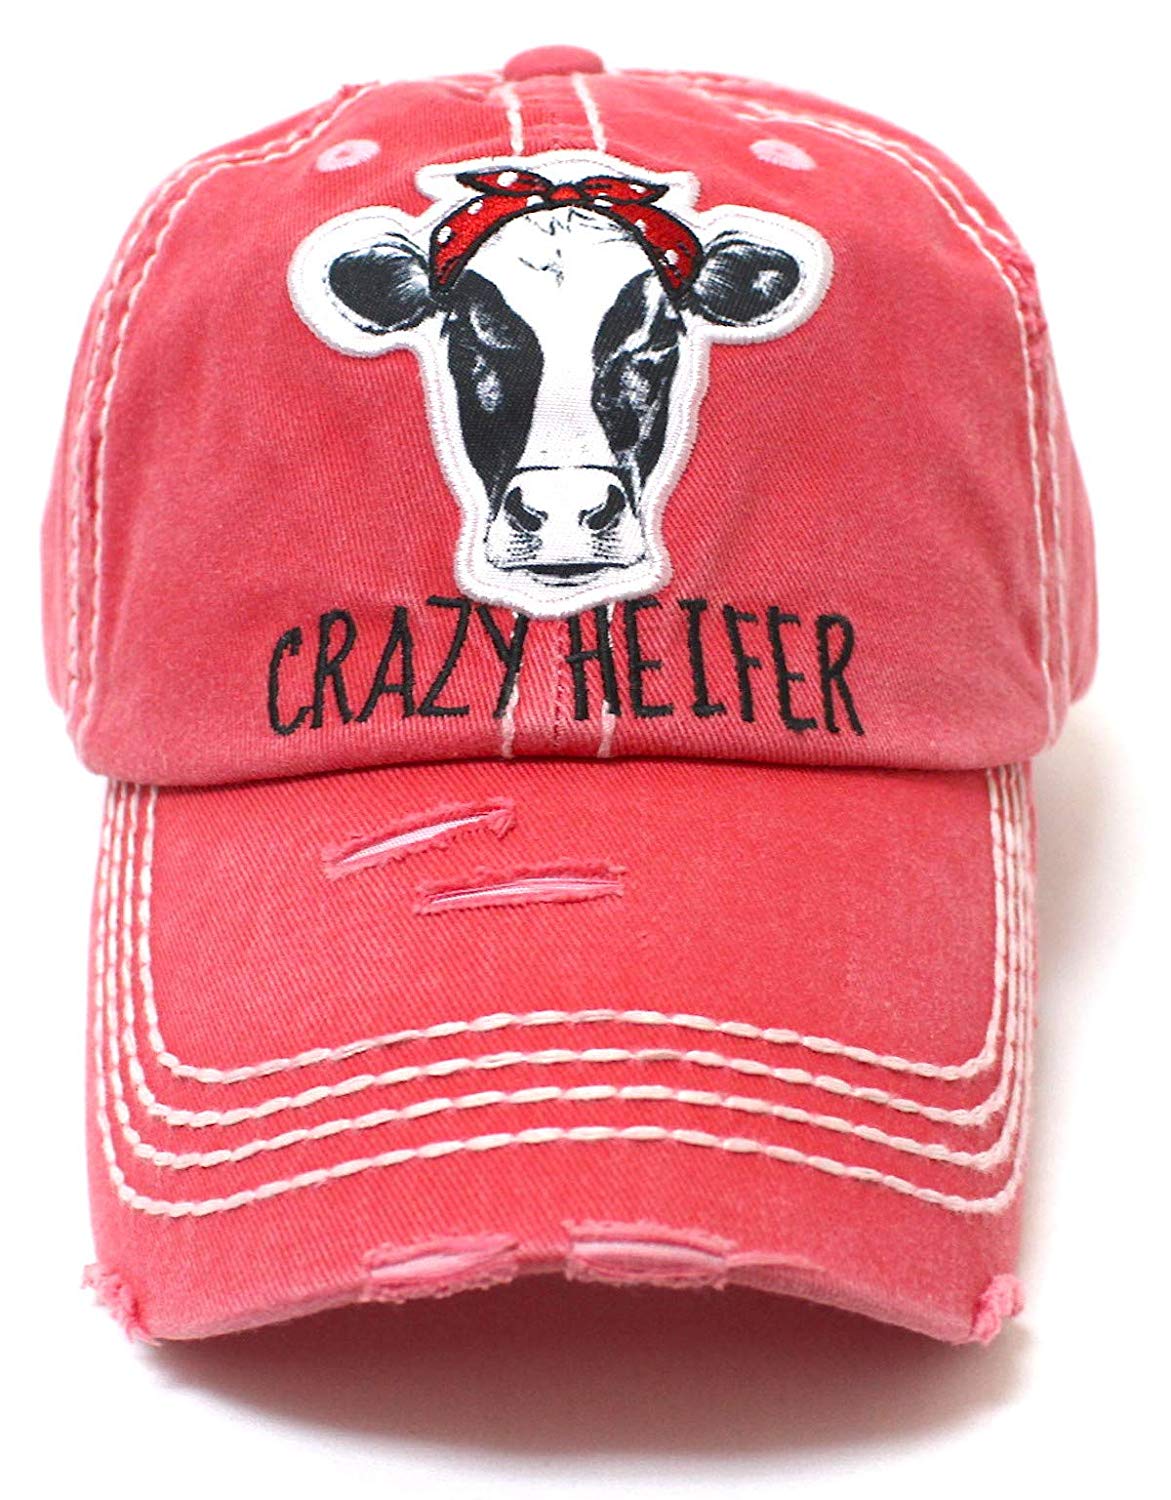 CAPS 'N VINTAGE Rose Pink Crazy Heifer Cow Patch Embroidery Hat - Caps 'N Vintage 